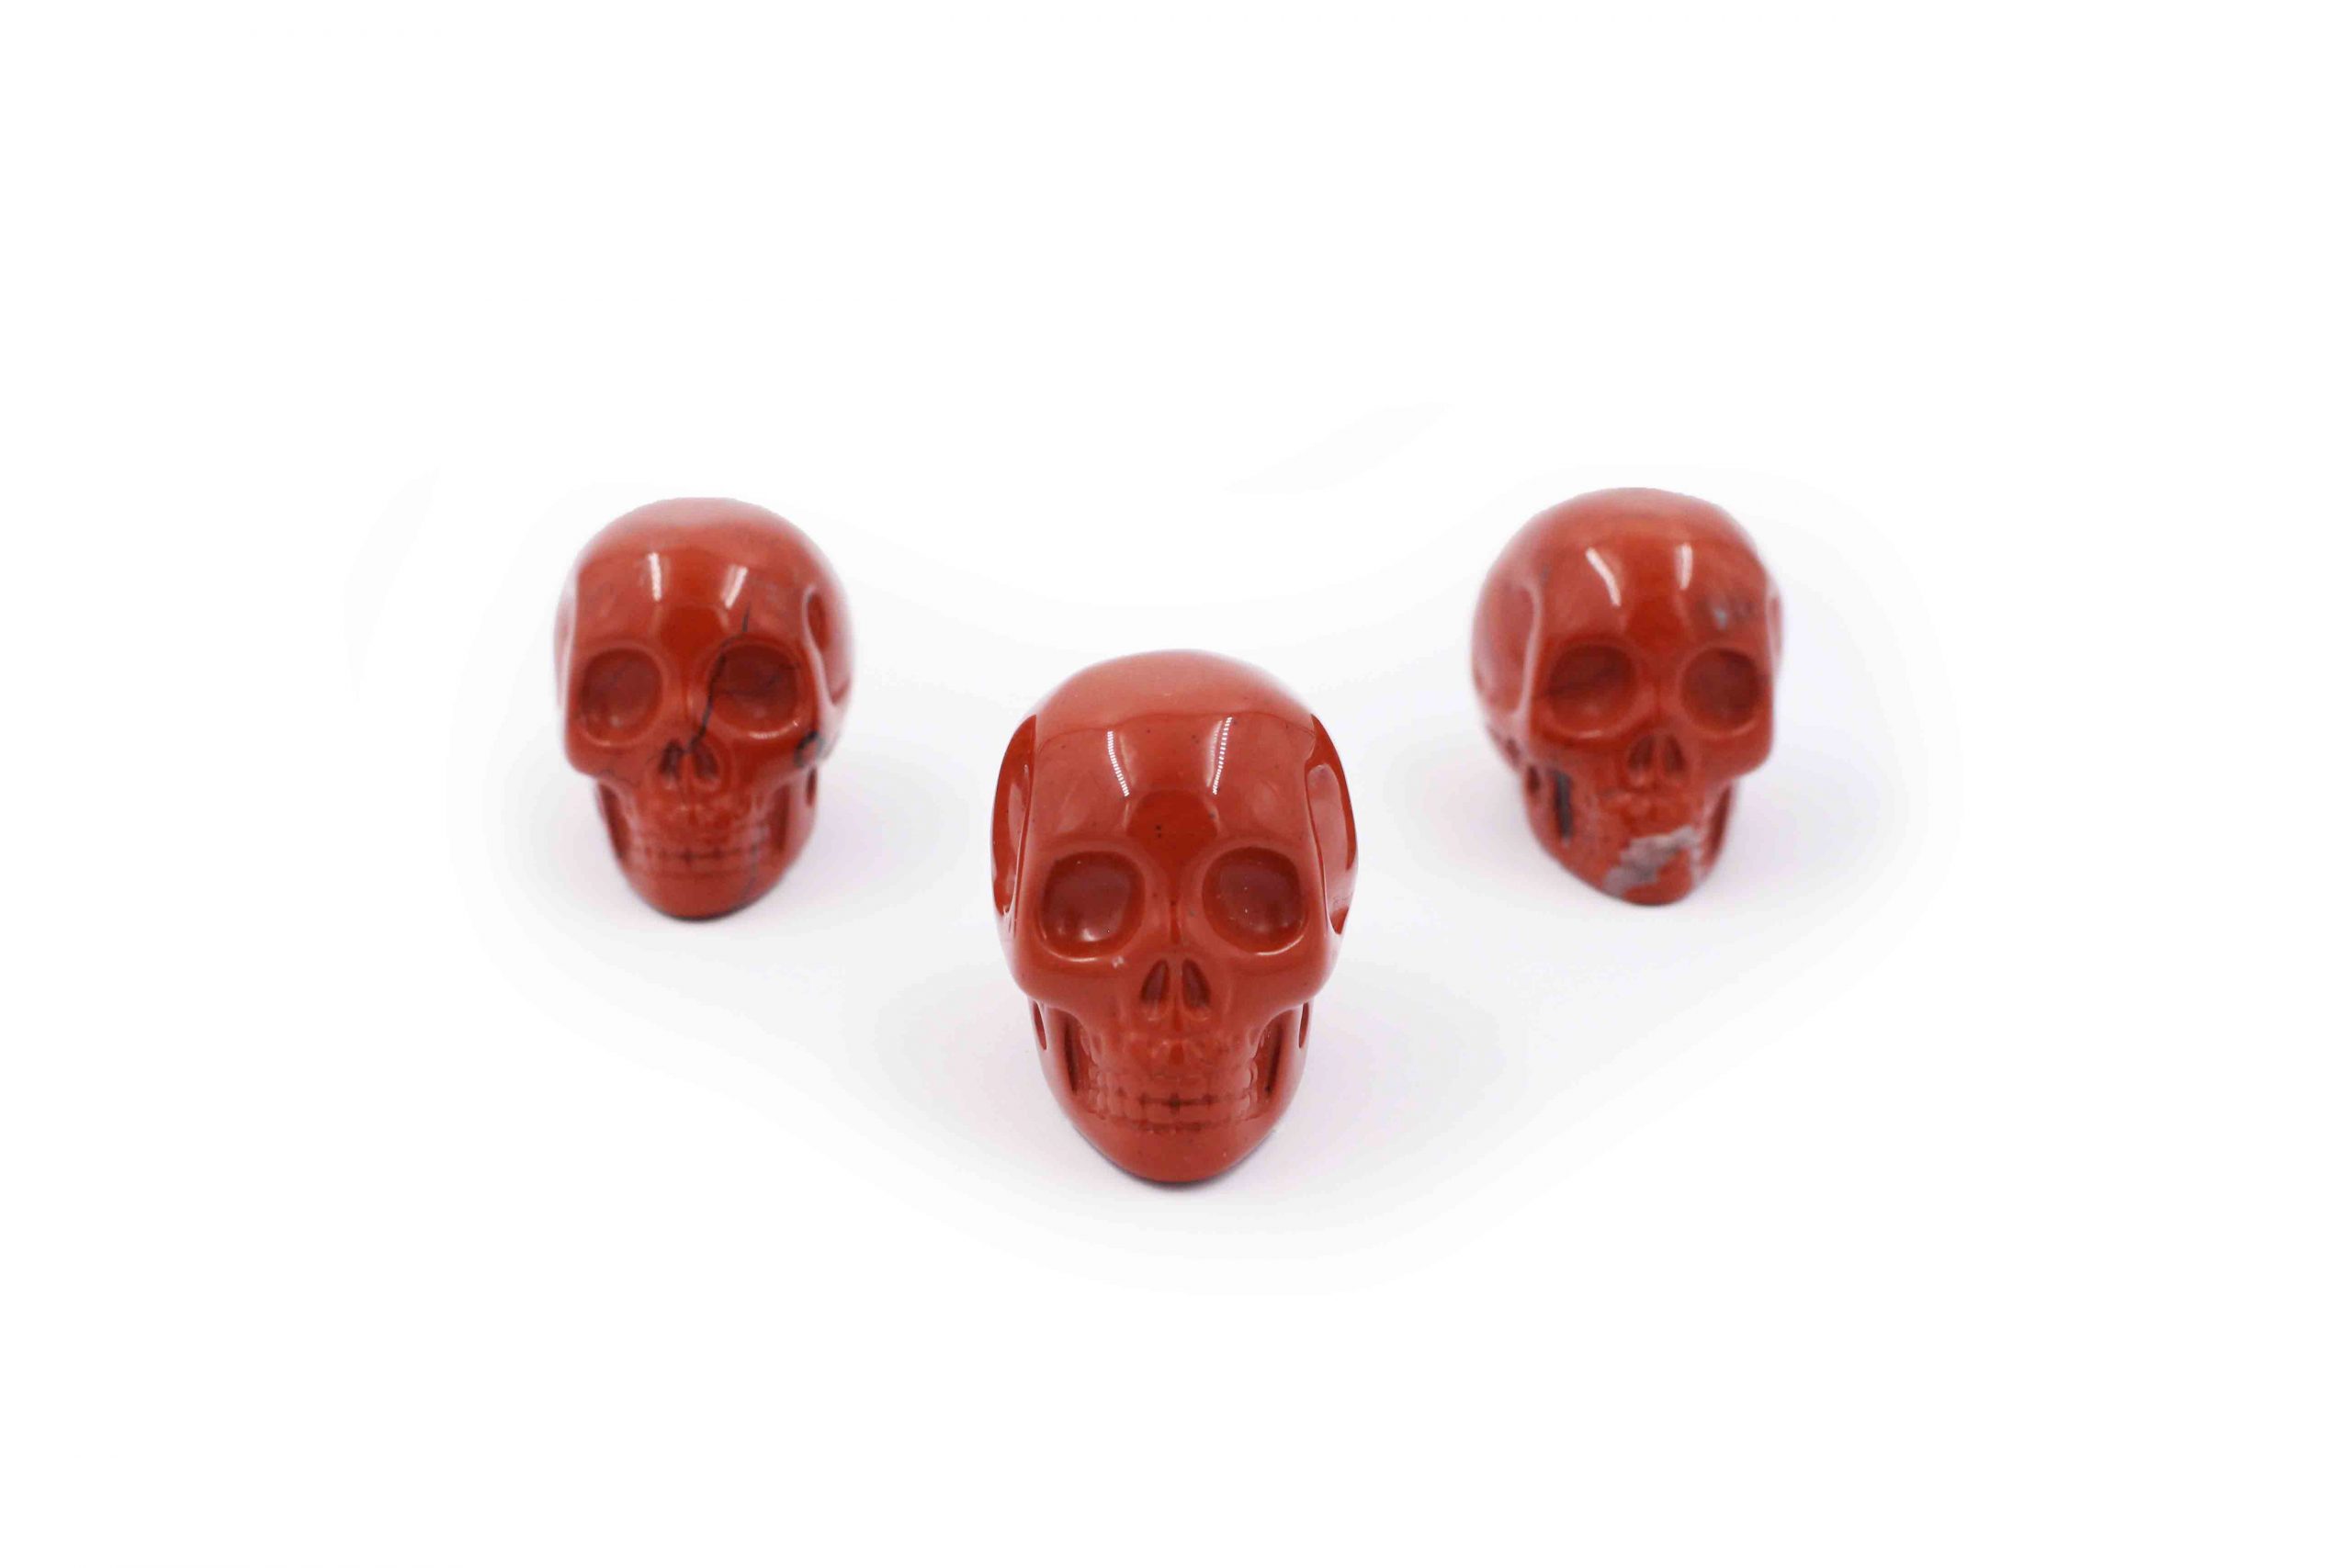 Natural Gemstone Red Jasper carved skull skeleton beads 8mm x2 